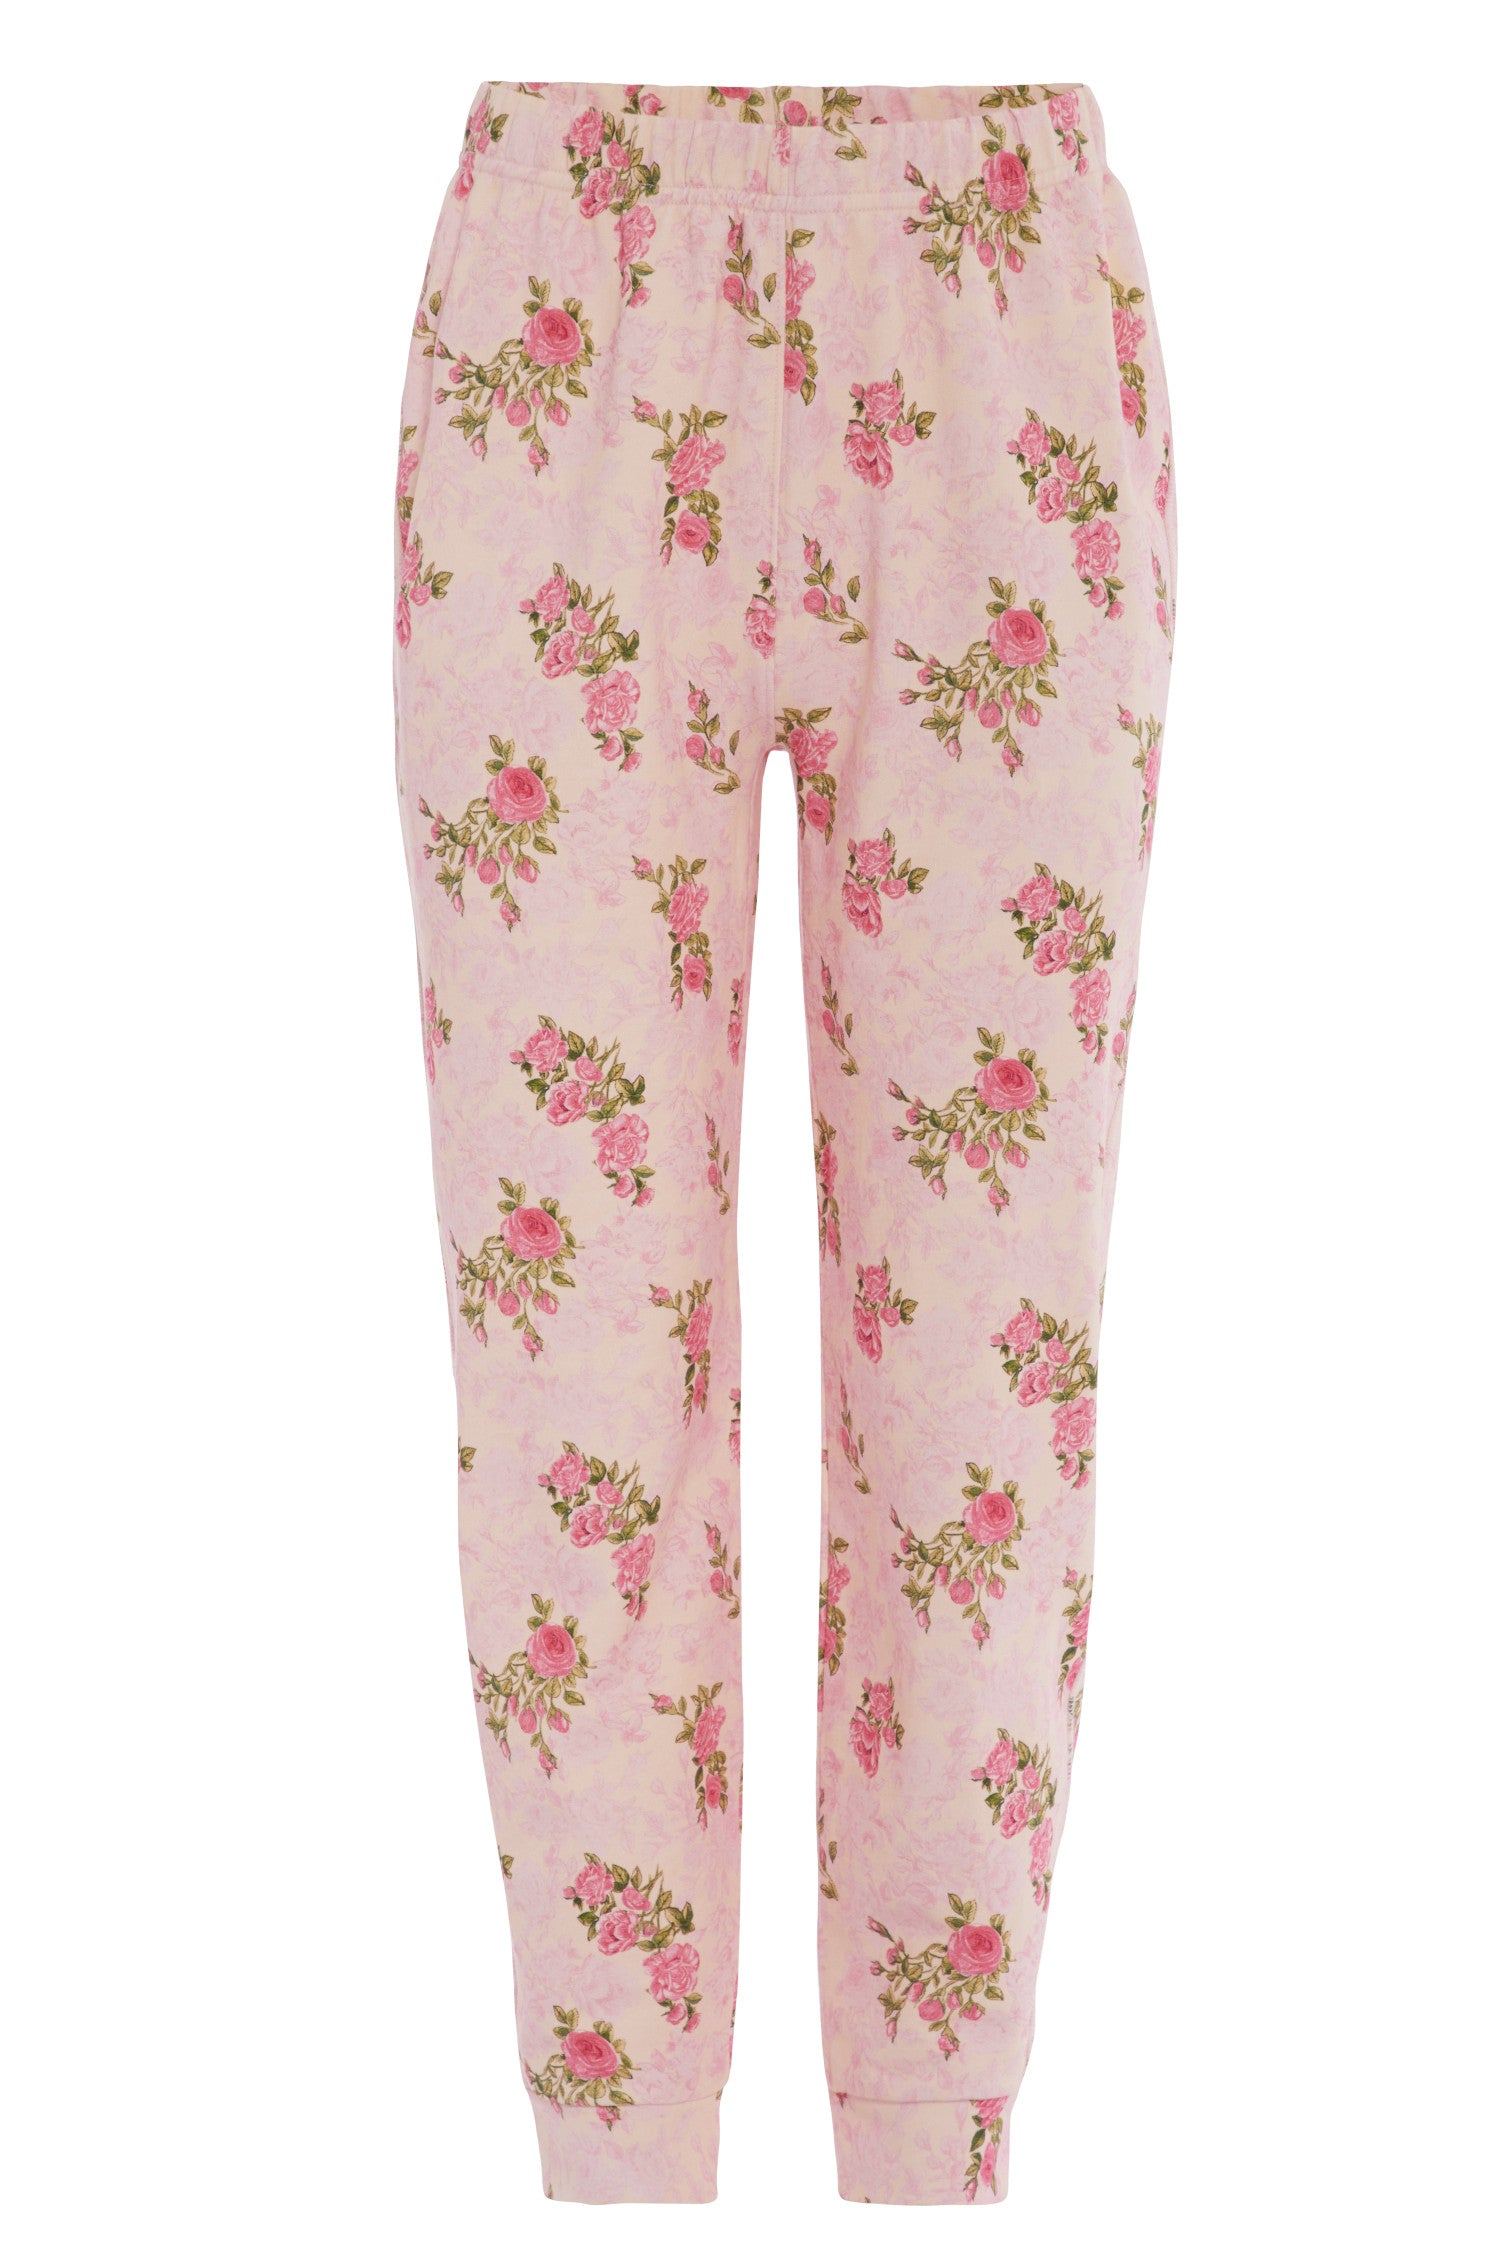 Rosebud sweatpants with rosebud print and tie detailing in front.